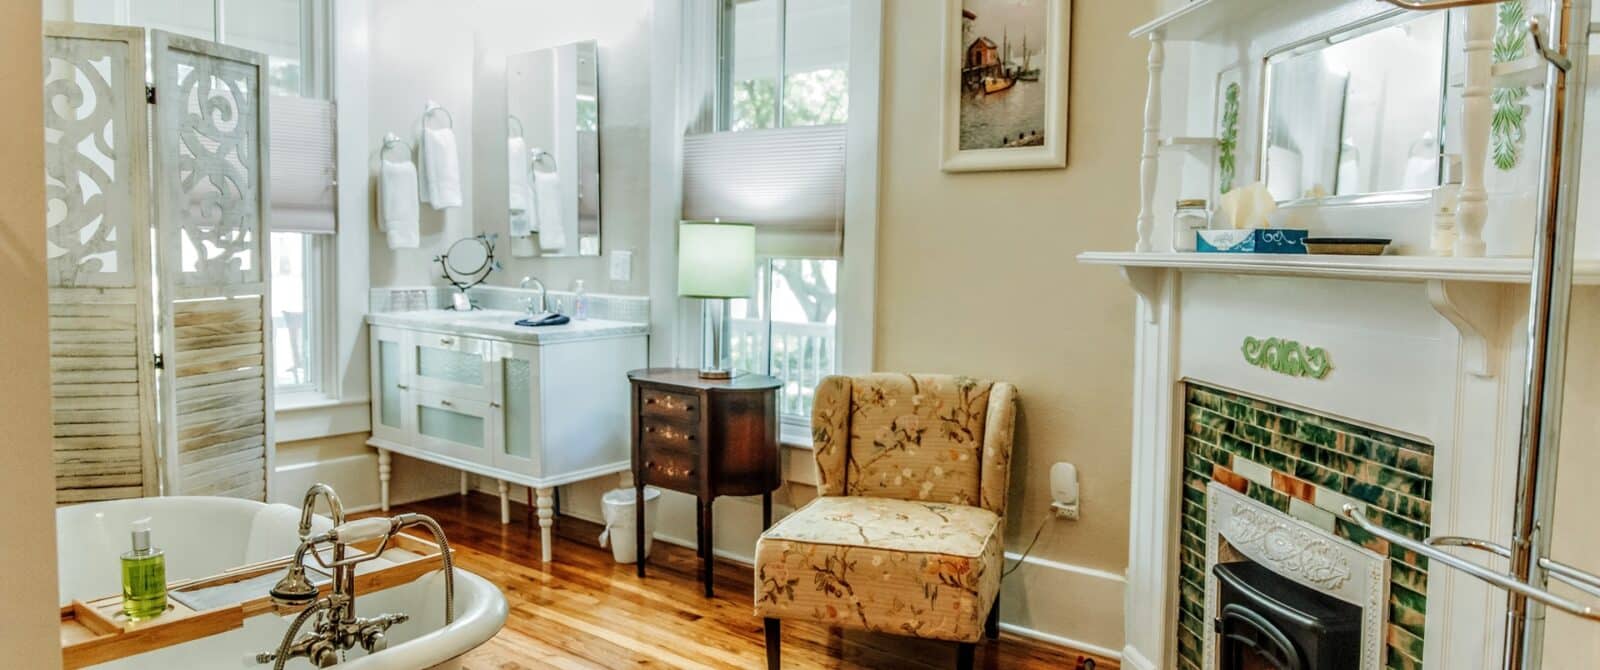 elegant bathroom with an antique clawfoot soaking tub, fireplace, vanity, windows, and wood floor